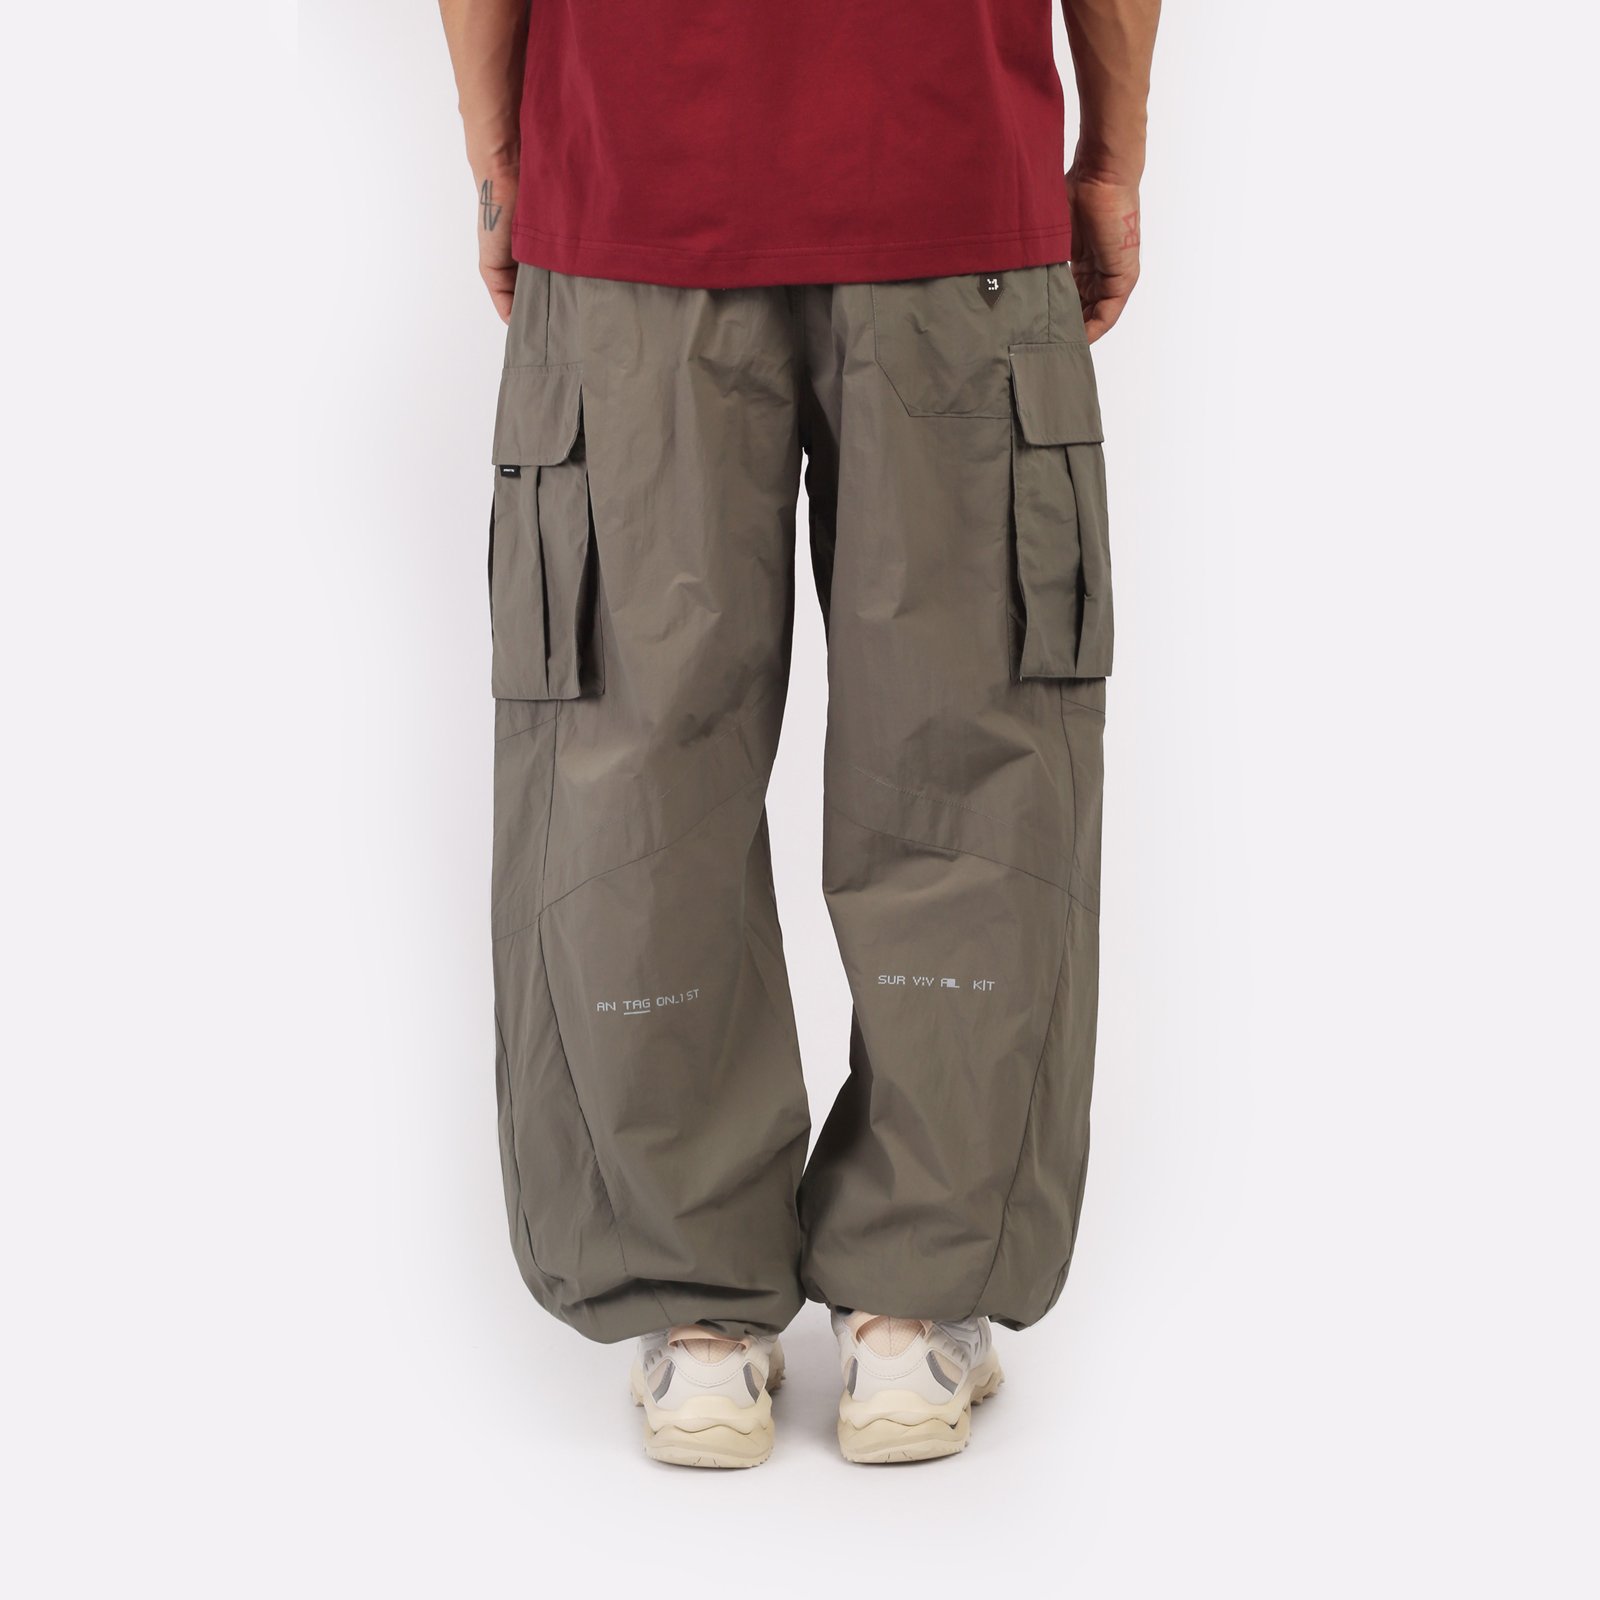 мужские серые брюки KRAKATAU Rm176-52 Rm176-52-елово-сер - цена, описание, фото 2